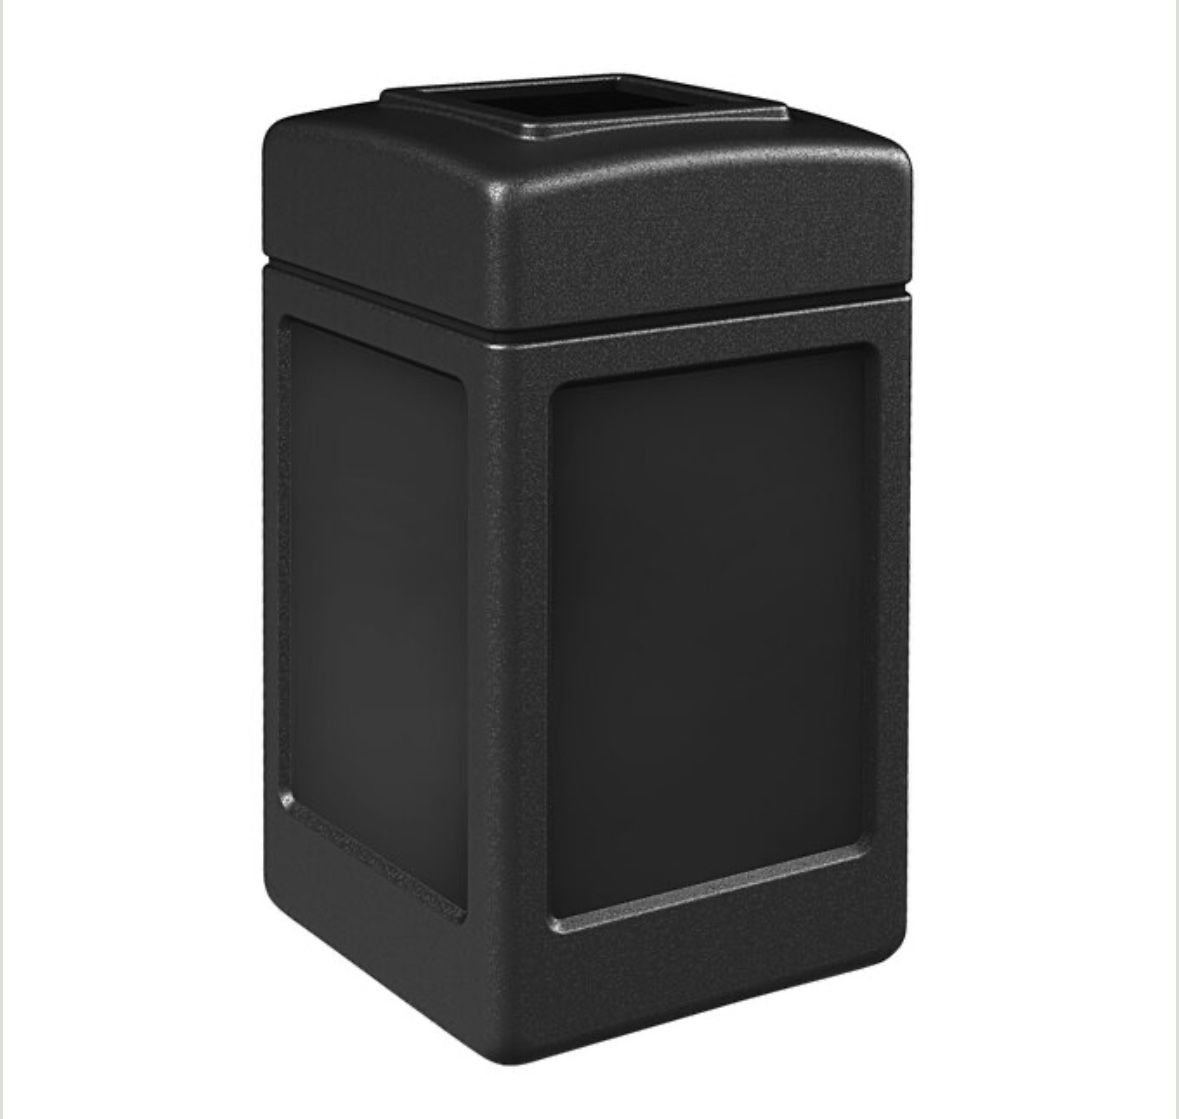  42 Gallon Square Black Waste Container (x6) *USED